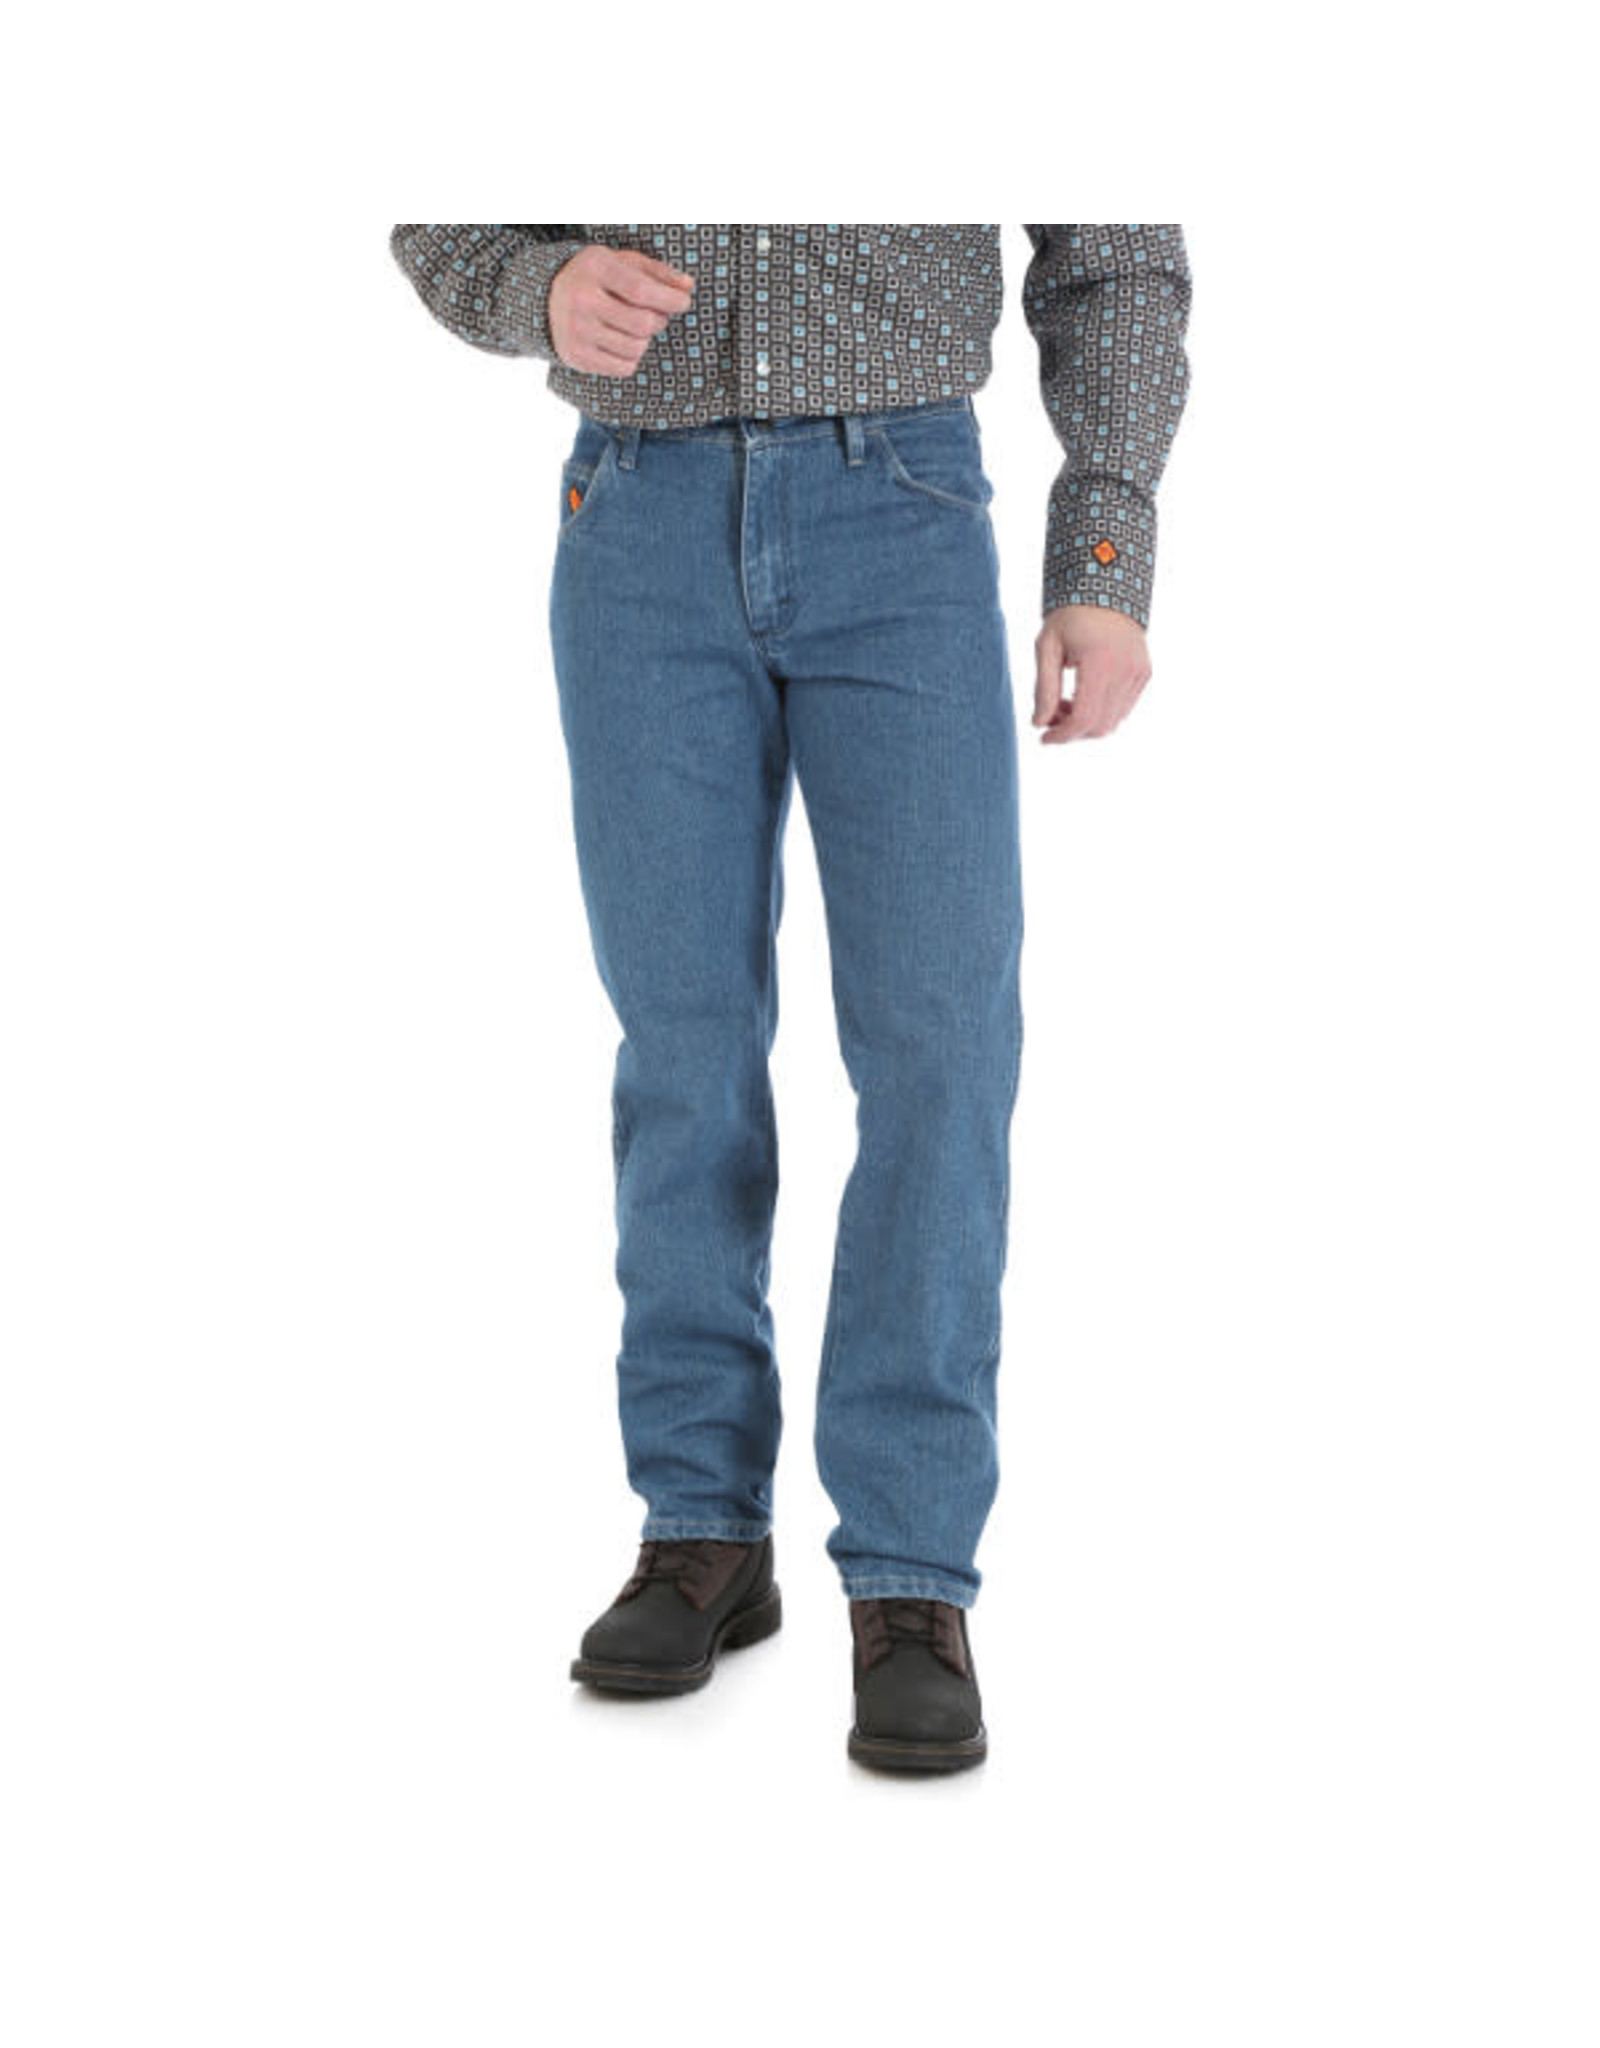 Wrangler Men's FR FRCV47T Cool Vantage Jeans